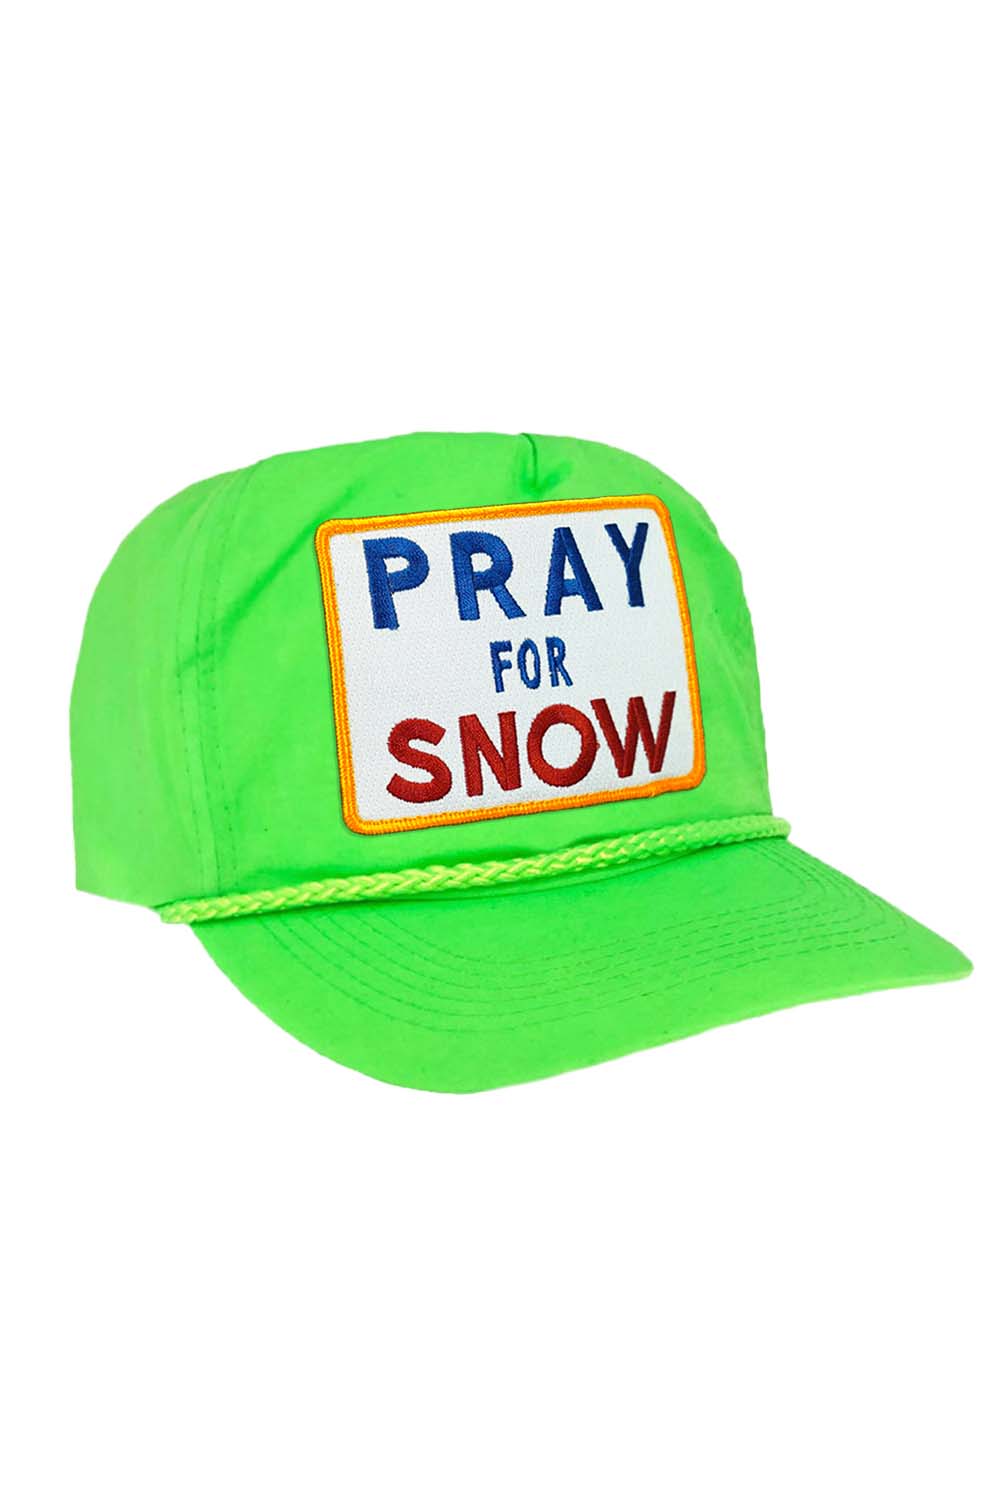 PRAY FOR SNOW - VINTAGE NYLON TRUCKER HAT HATS Aviator Nation NEON GREEN 